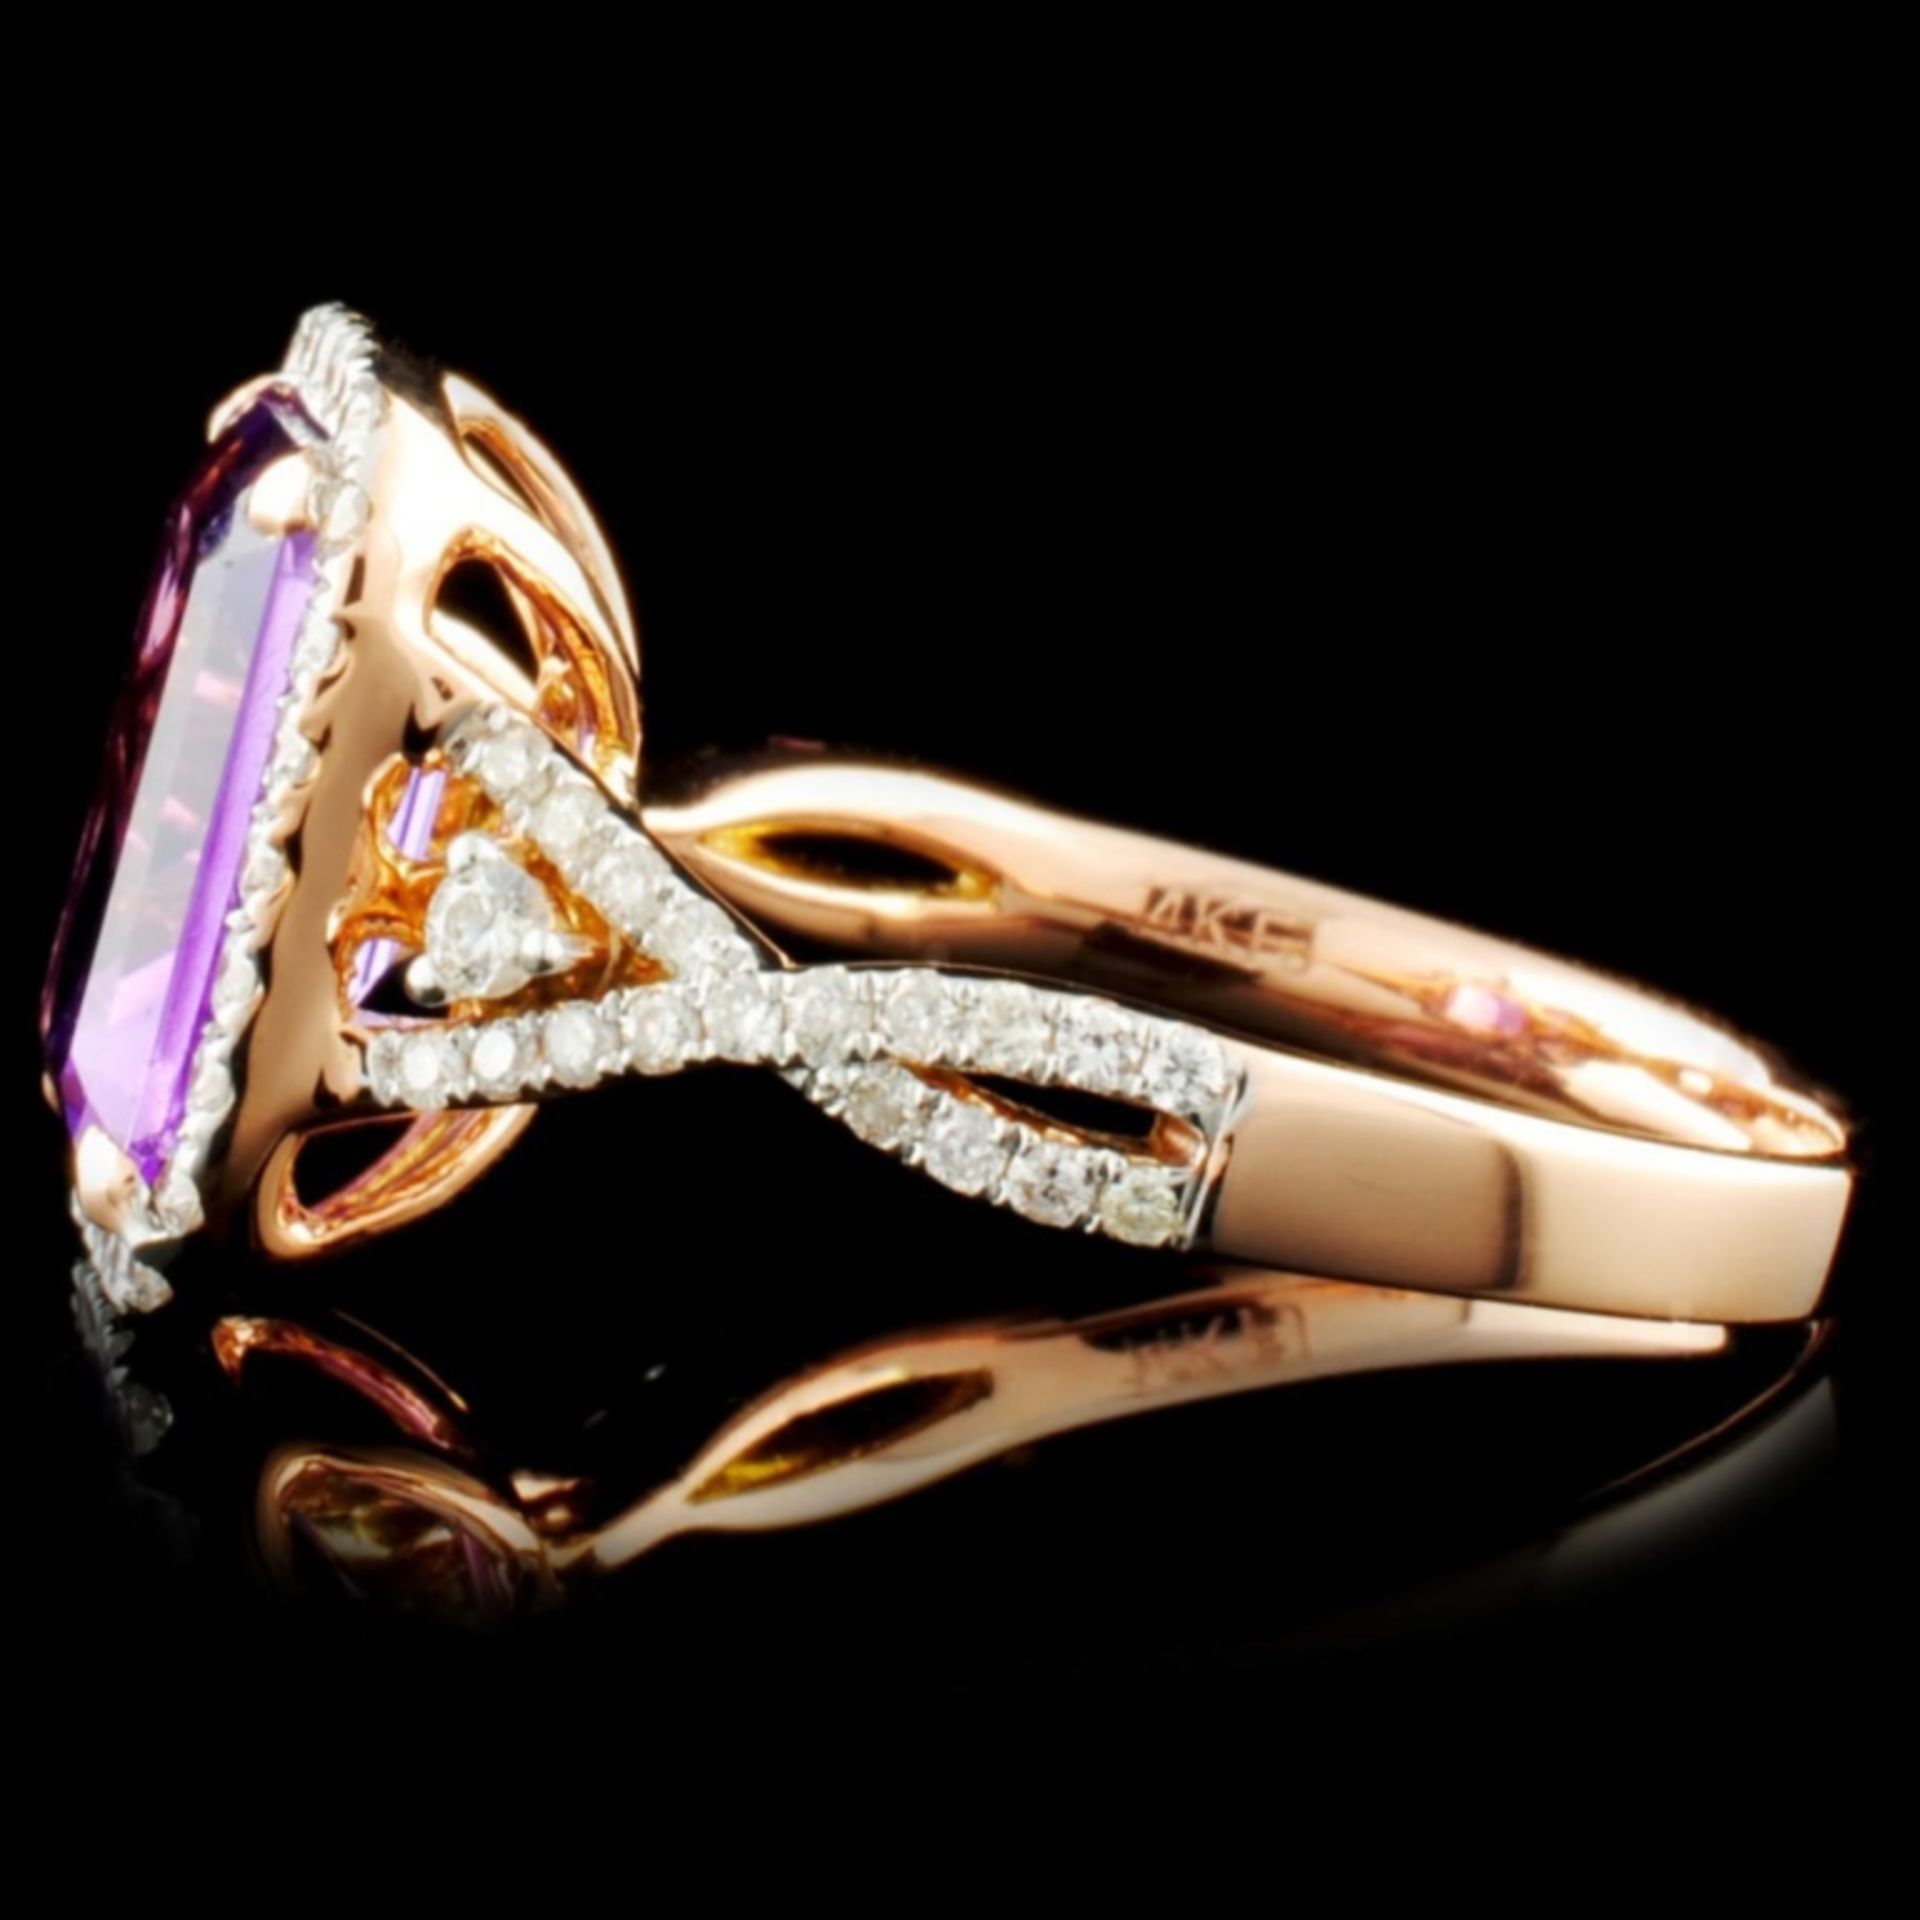 14K Gold 2.29ct Amethyst & 0.50ctw Diamond Ring - Image 3 of 3